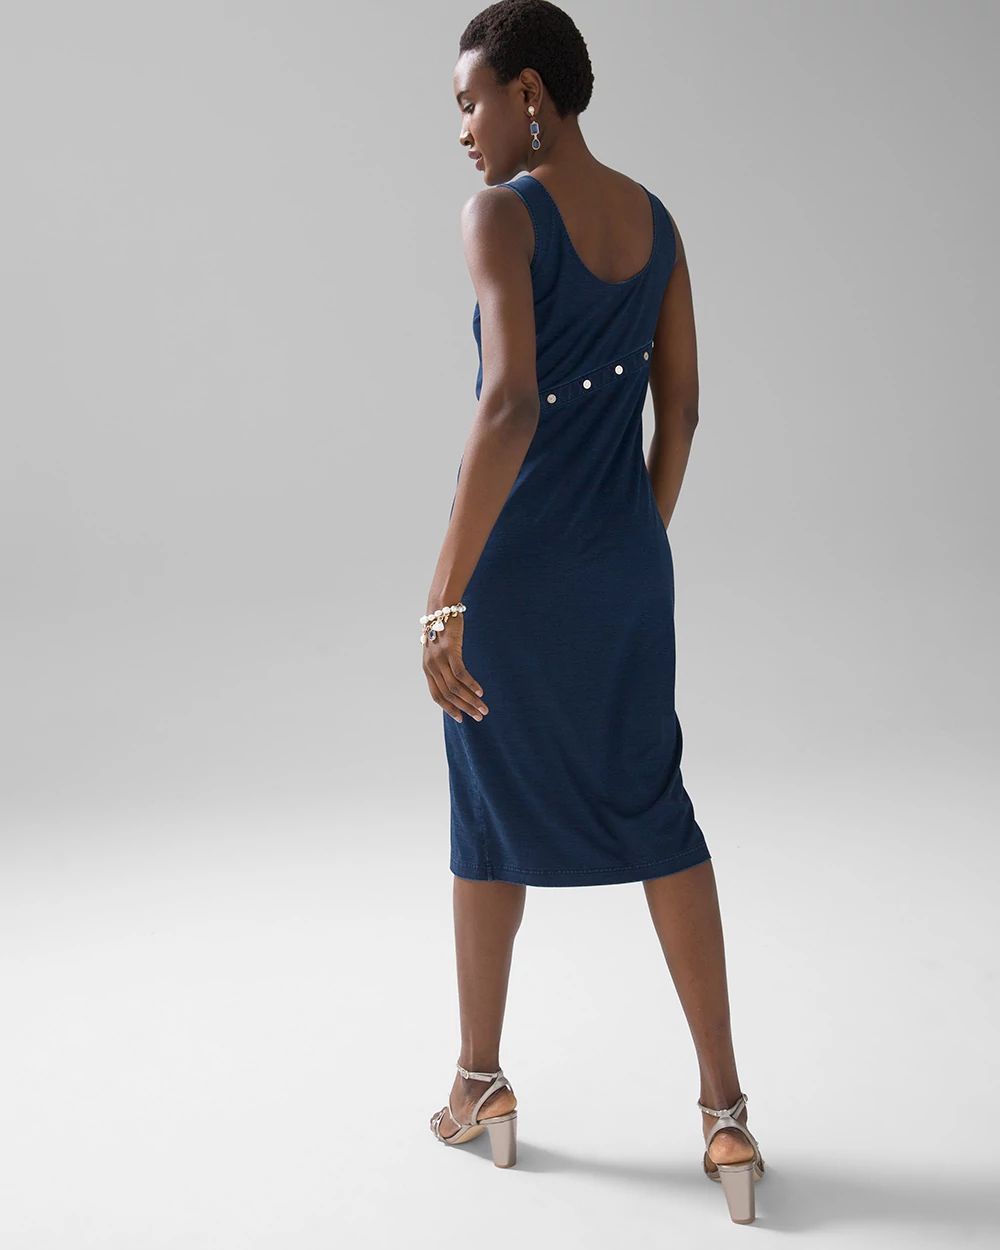 Petite Denim Blue Knit Midi Dress click to view larger image.